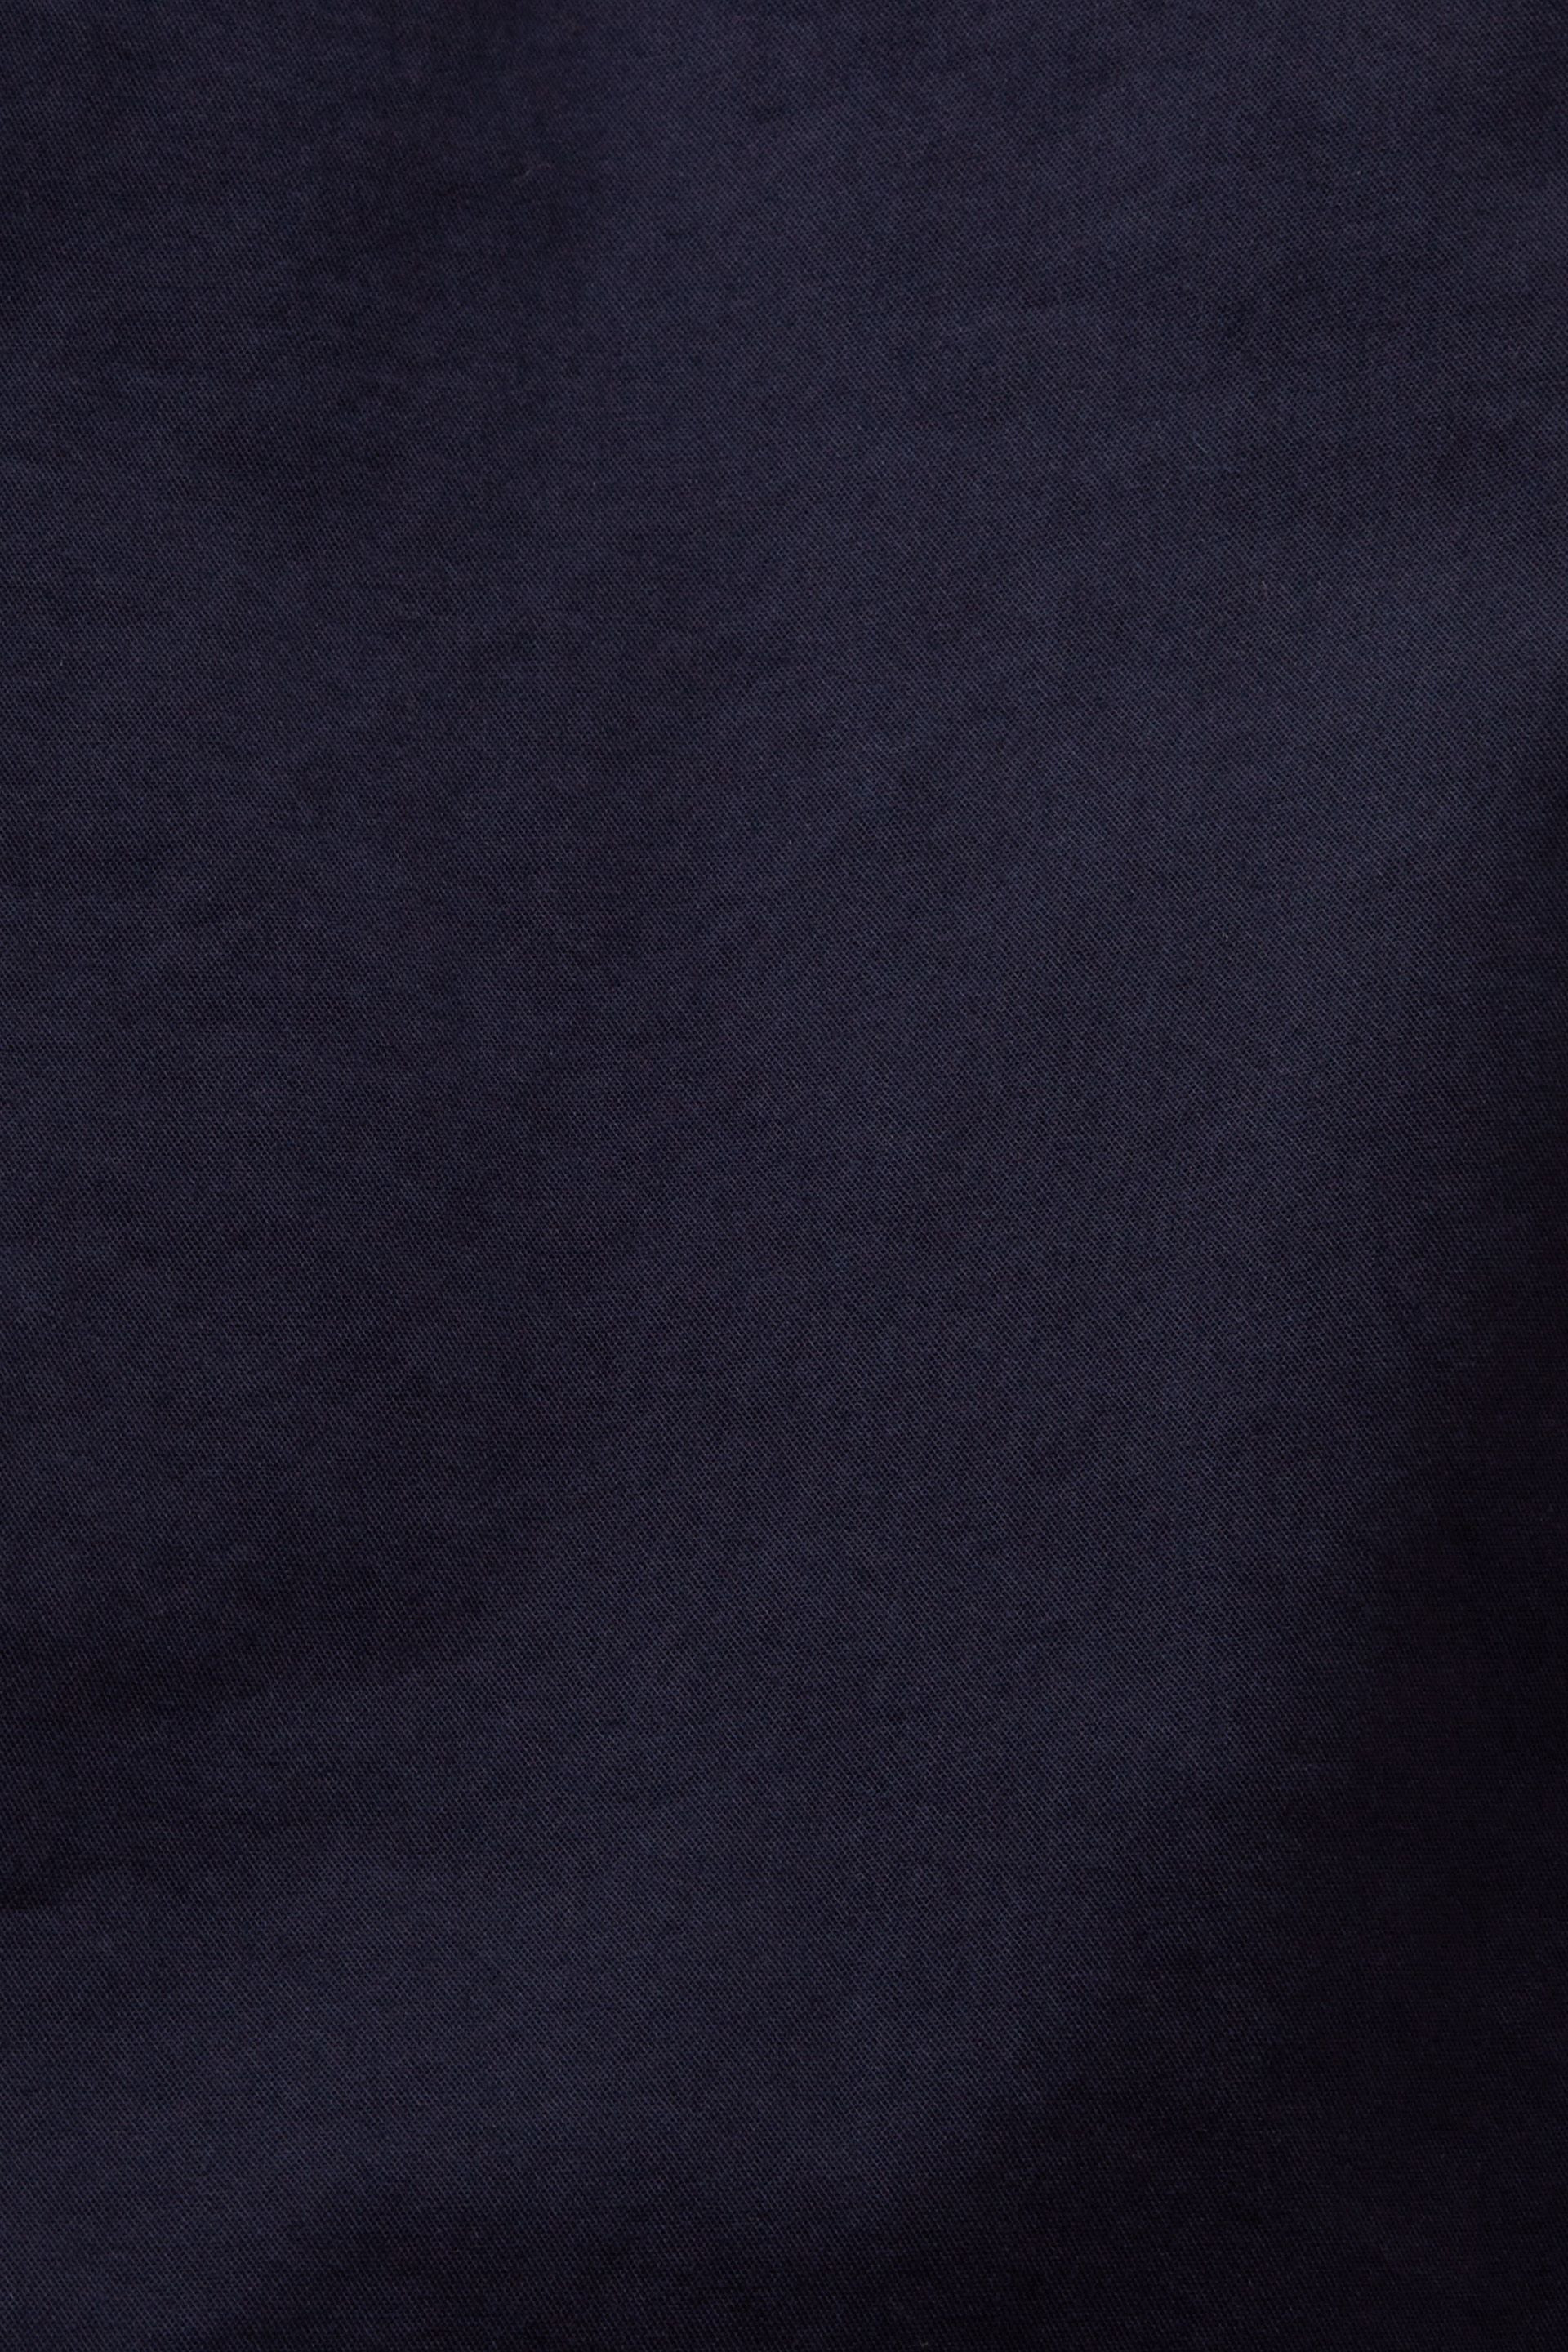 Esprit - Pantaloni chino cropped con cintura, Blu scuro, large image number 3